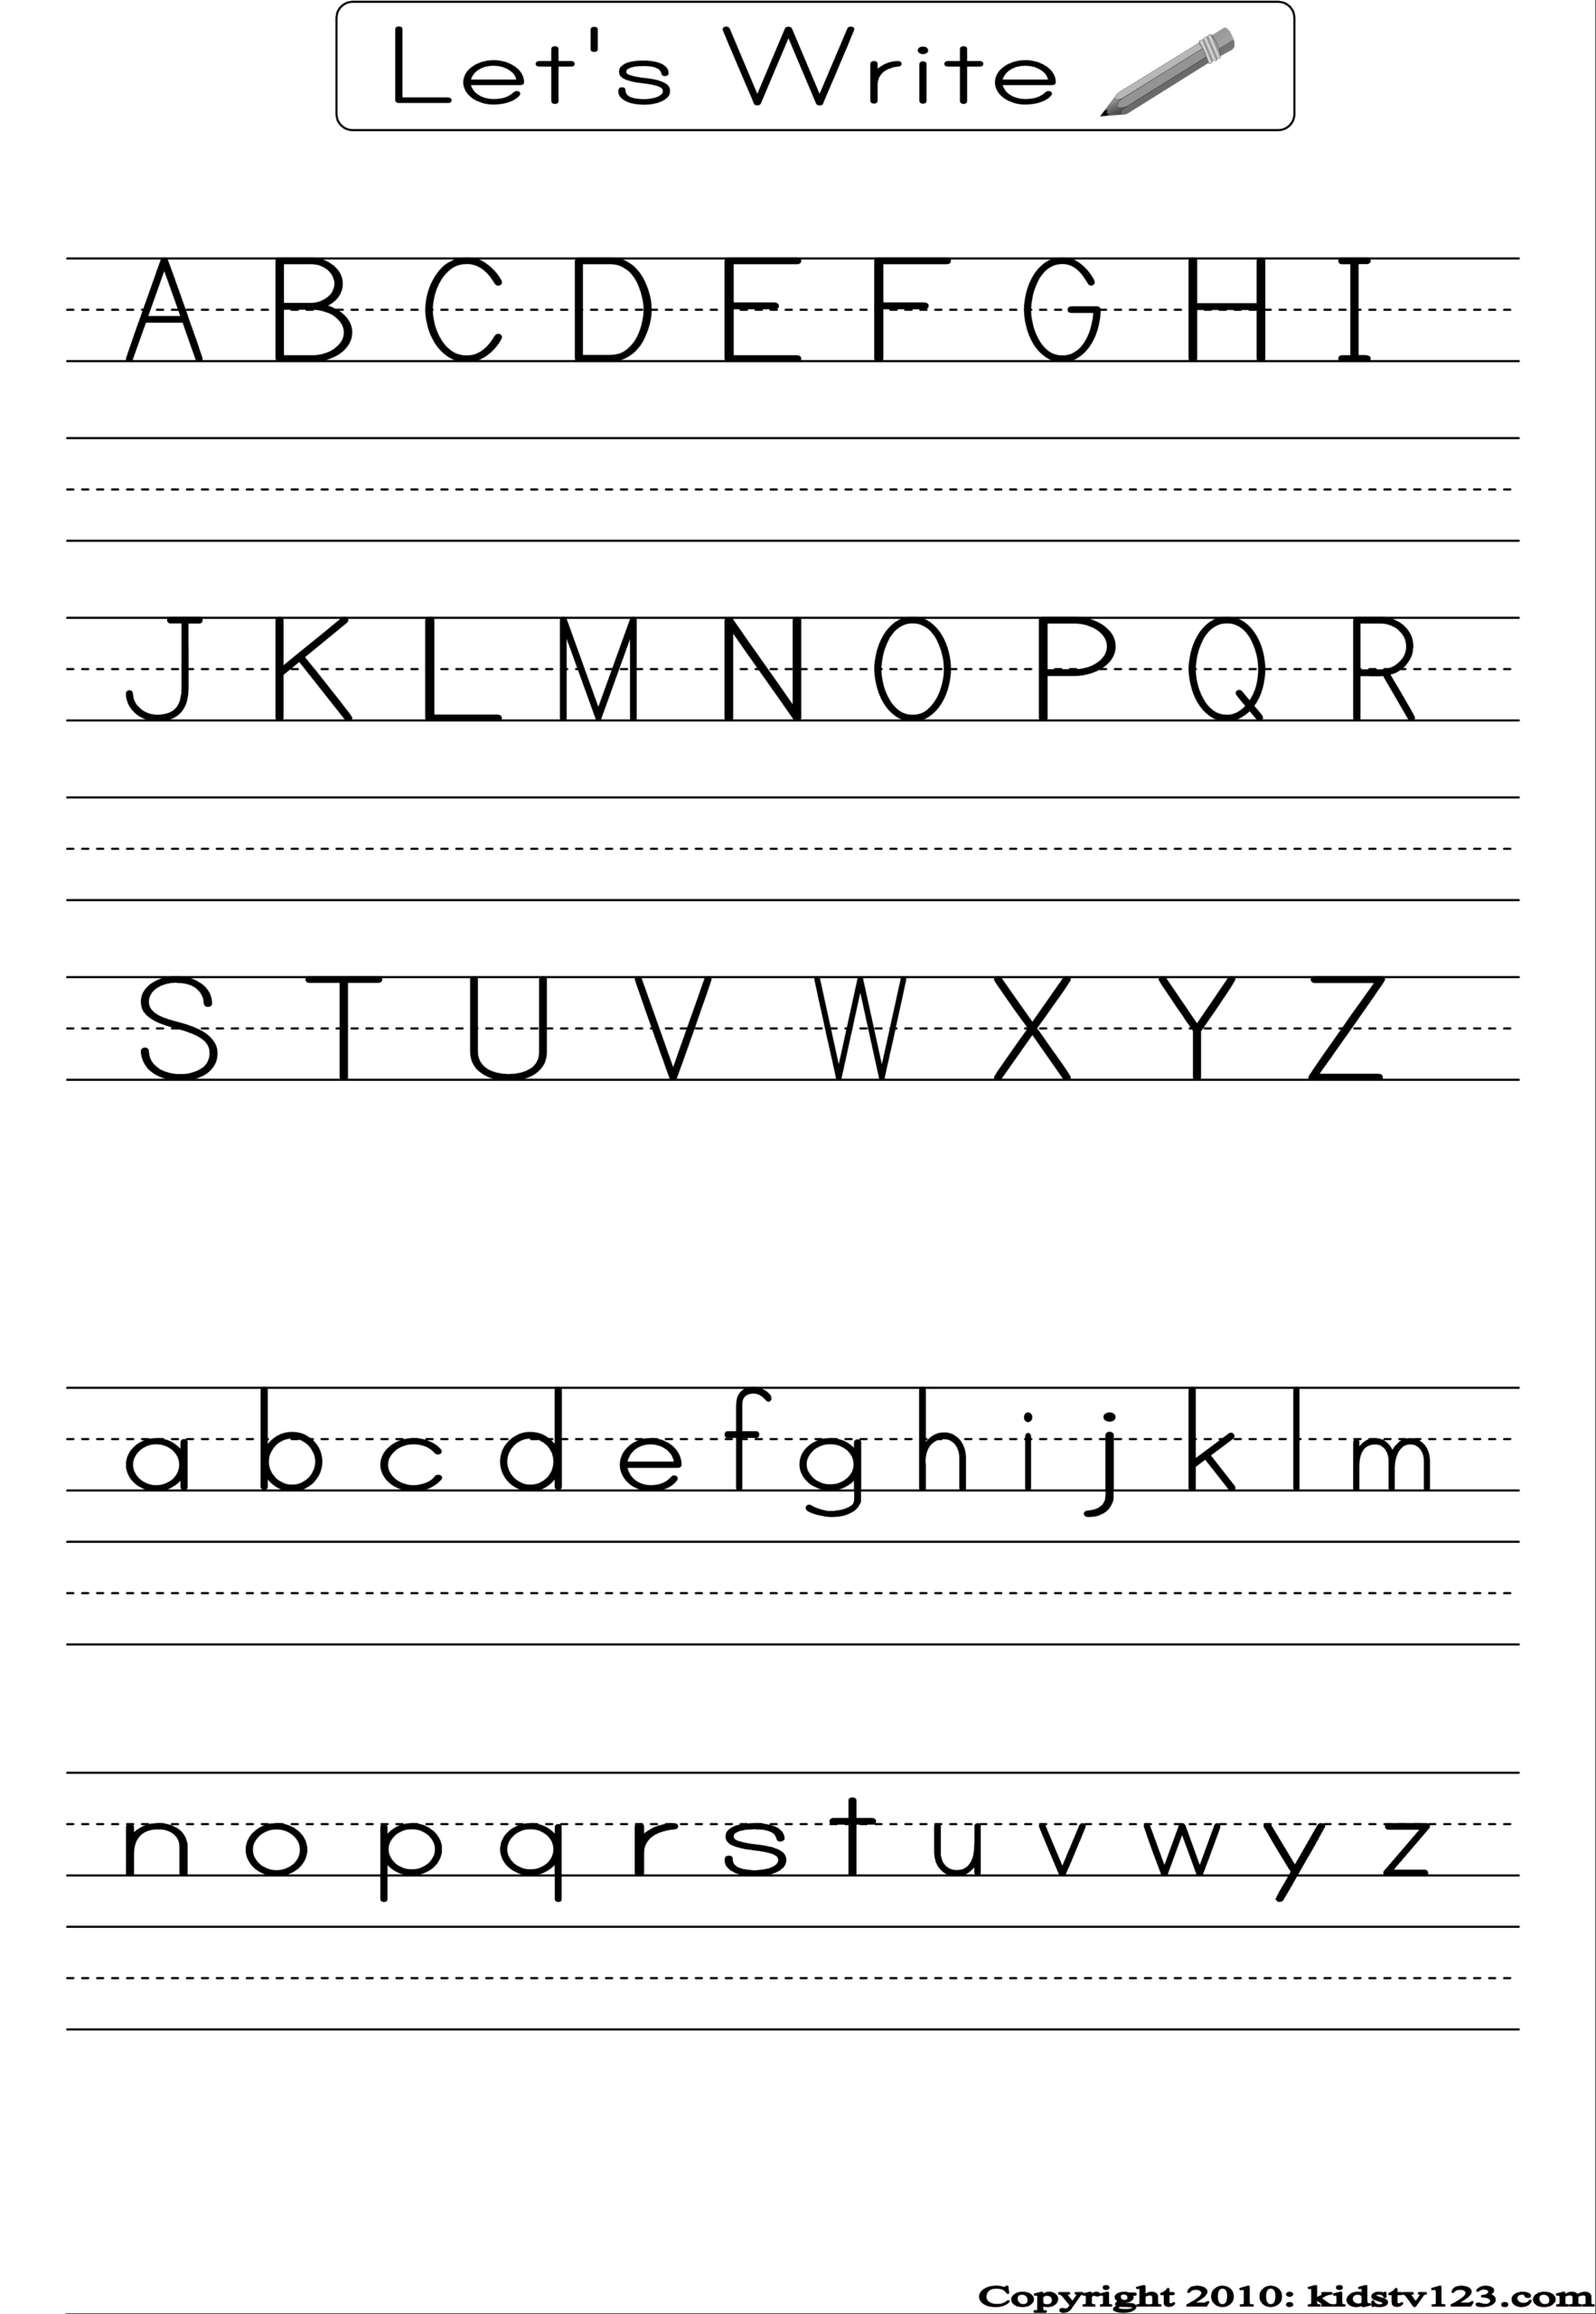 Alphabet Writing Practice Sheet | Alphabet Writing Practice throughout Alphabet Worksheets Handwriting